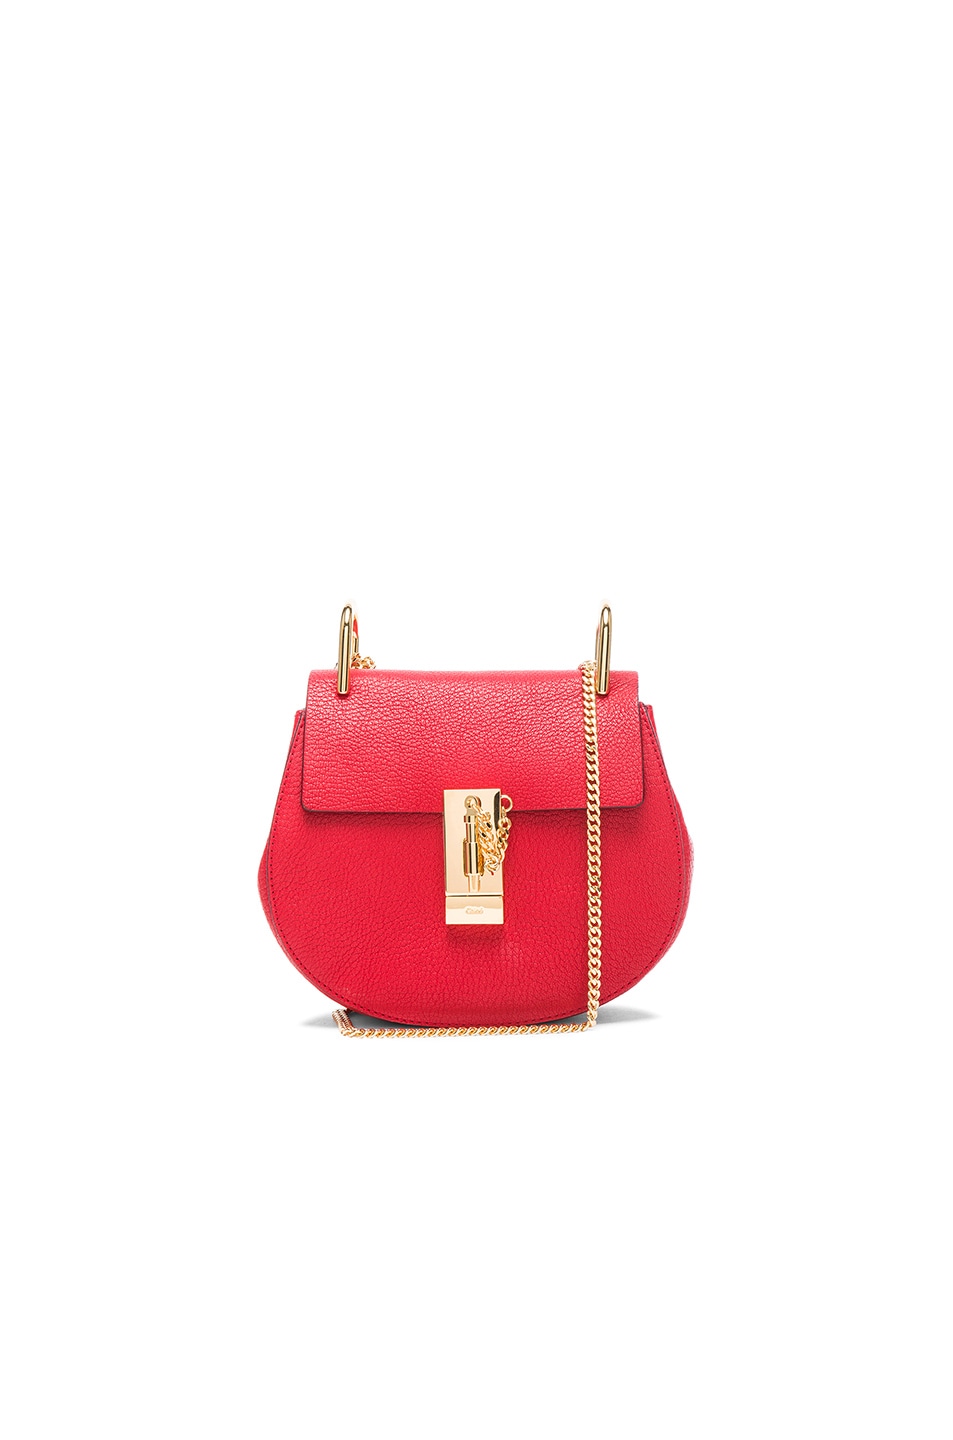 Chloe Drew Mini Shoulder Bag in Plaid Red | FWRD  